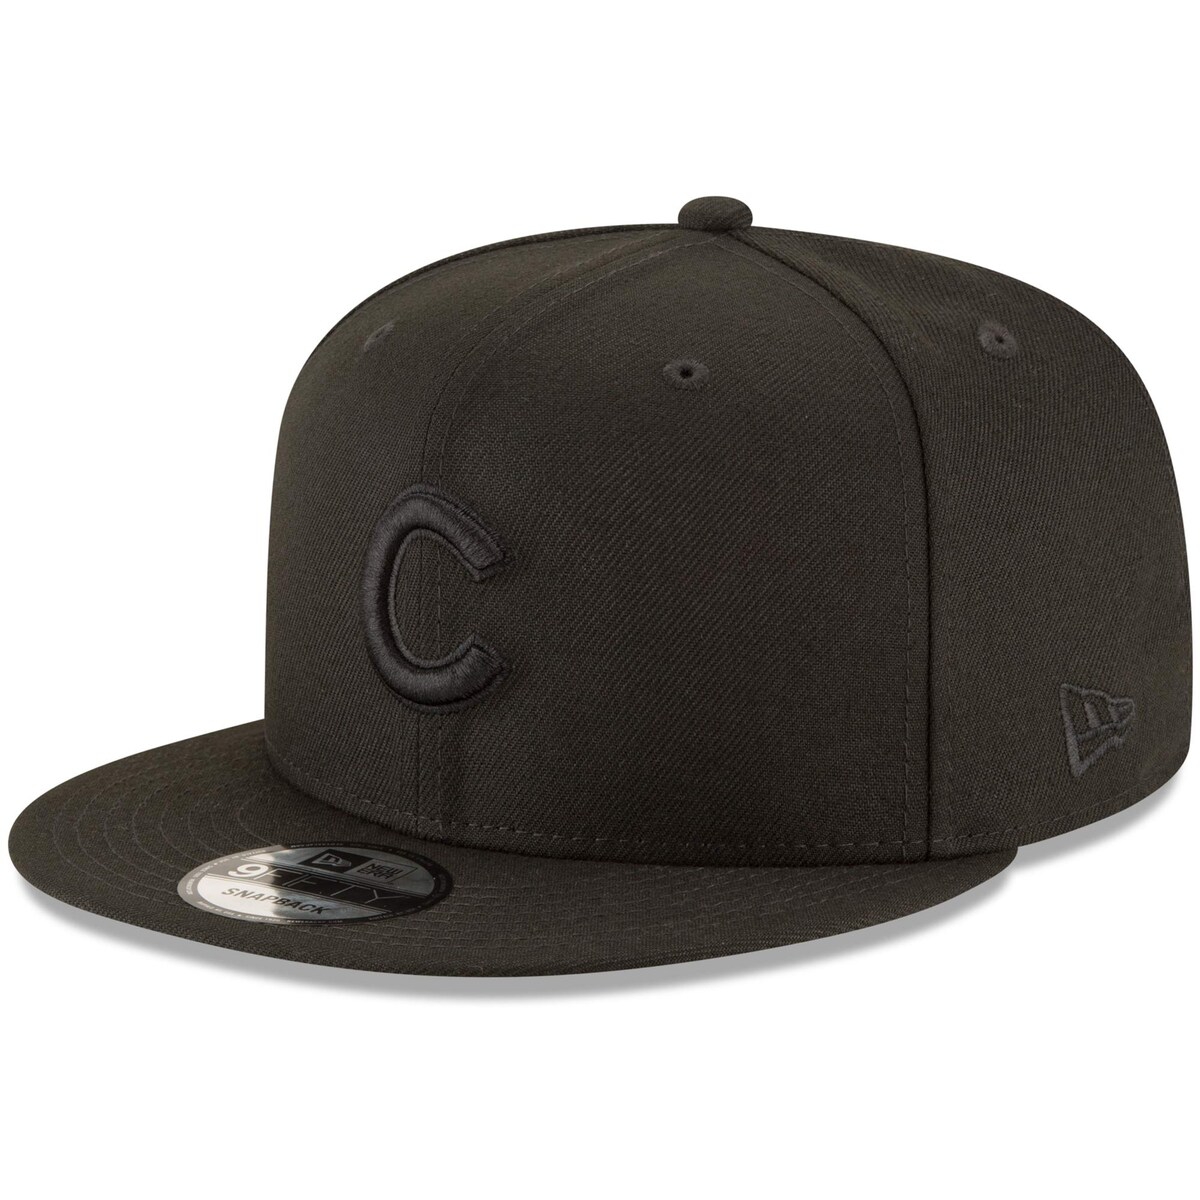 Shop New Era Men's Chicago Cubs Black On Black 9fifty Team Snapback Adjustable Cap